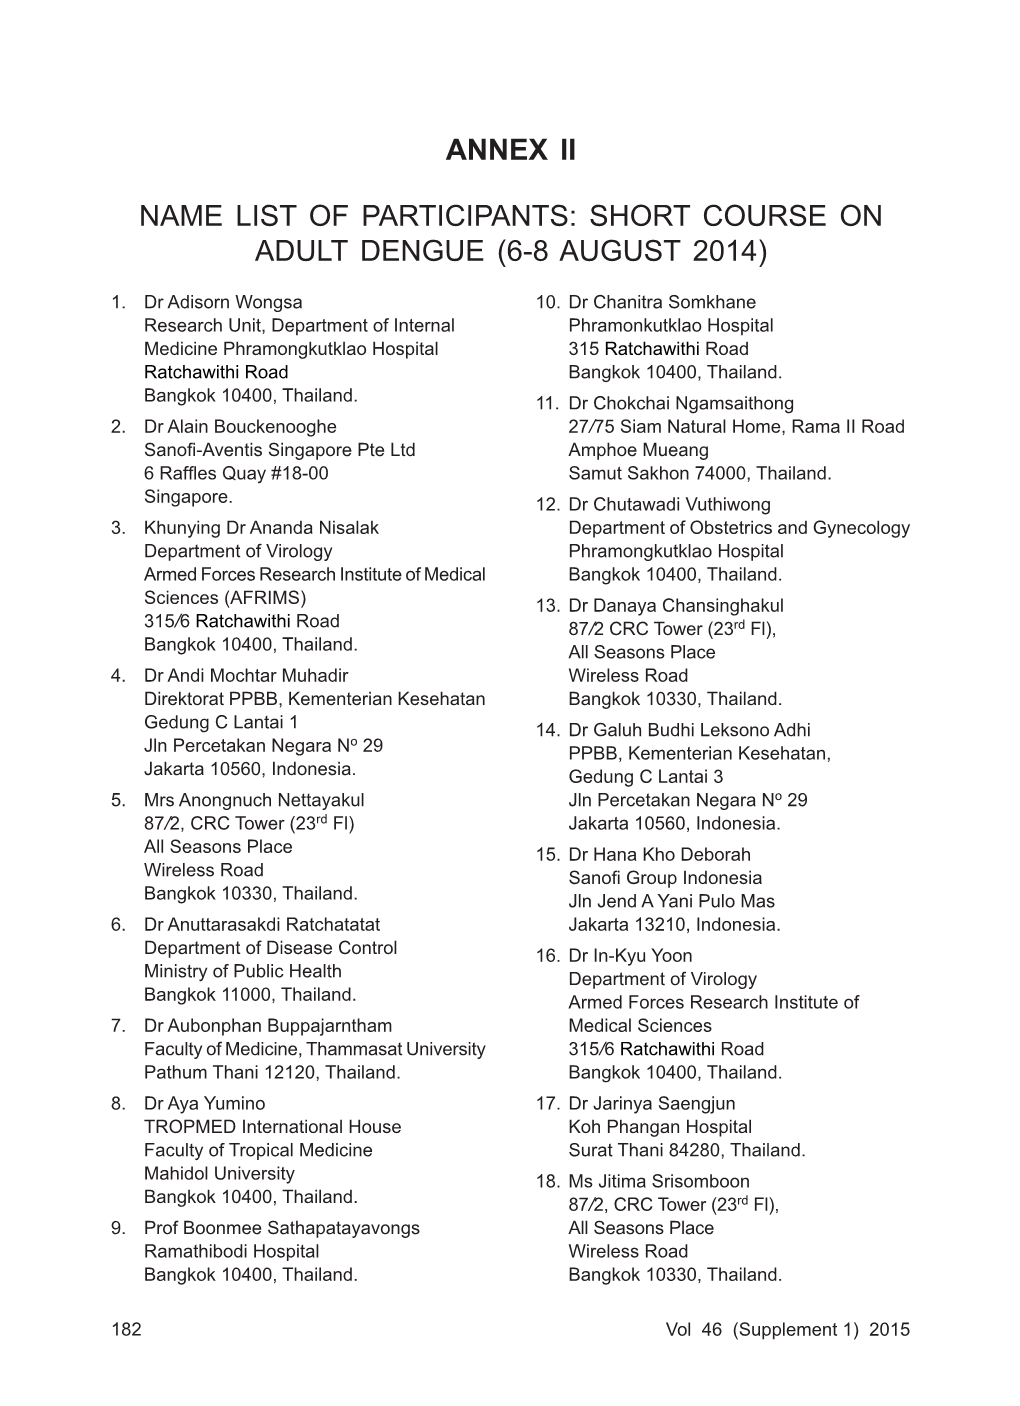 Annex Ii Name List of Participants: Short Course on Adult Dengue (6-8